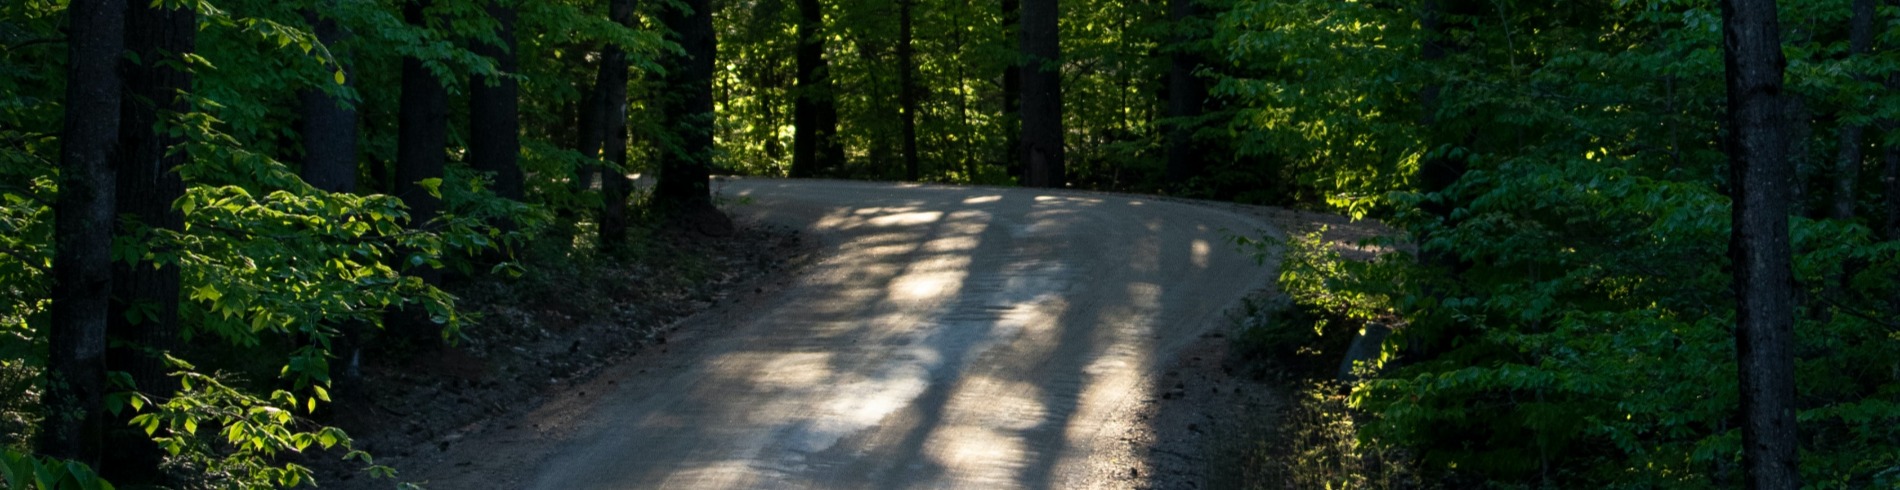 Long driveway in woods